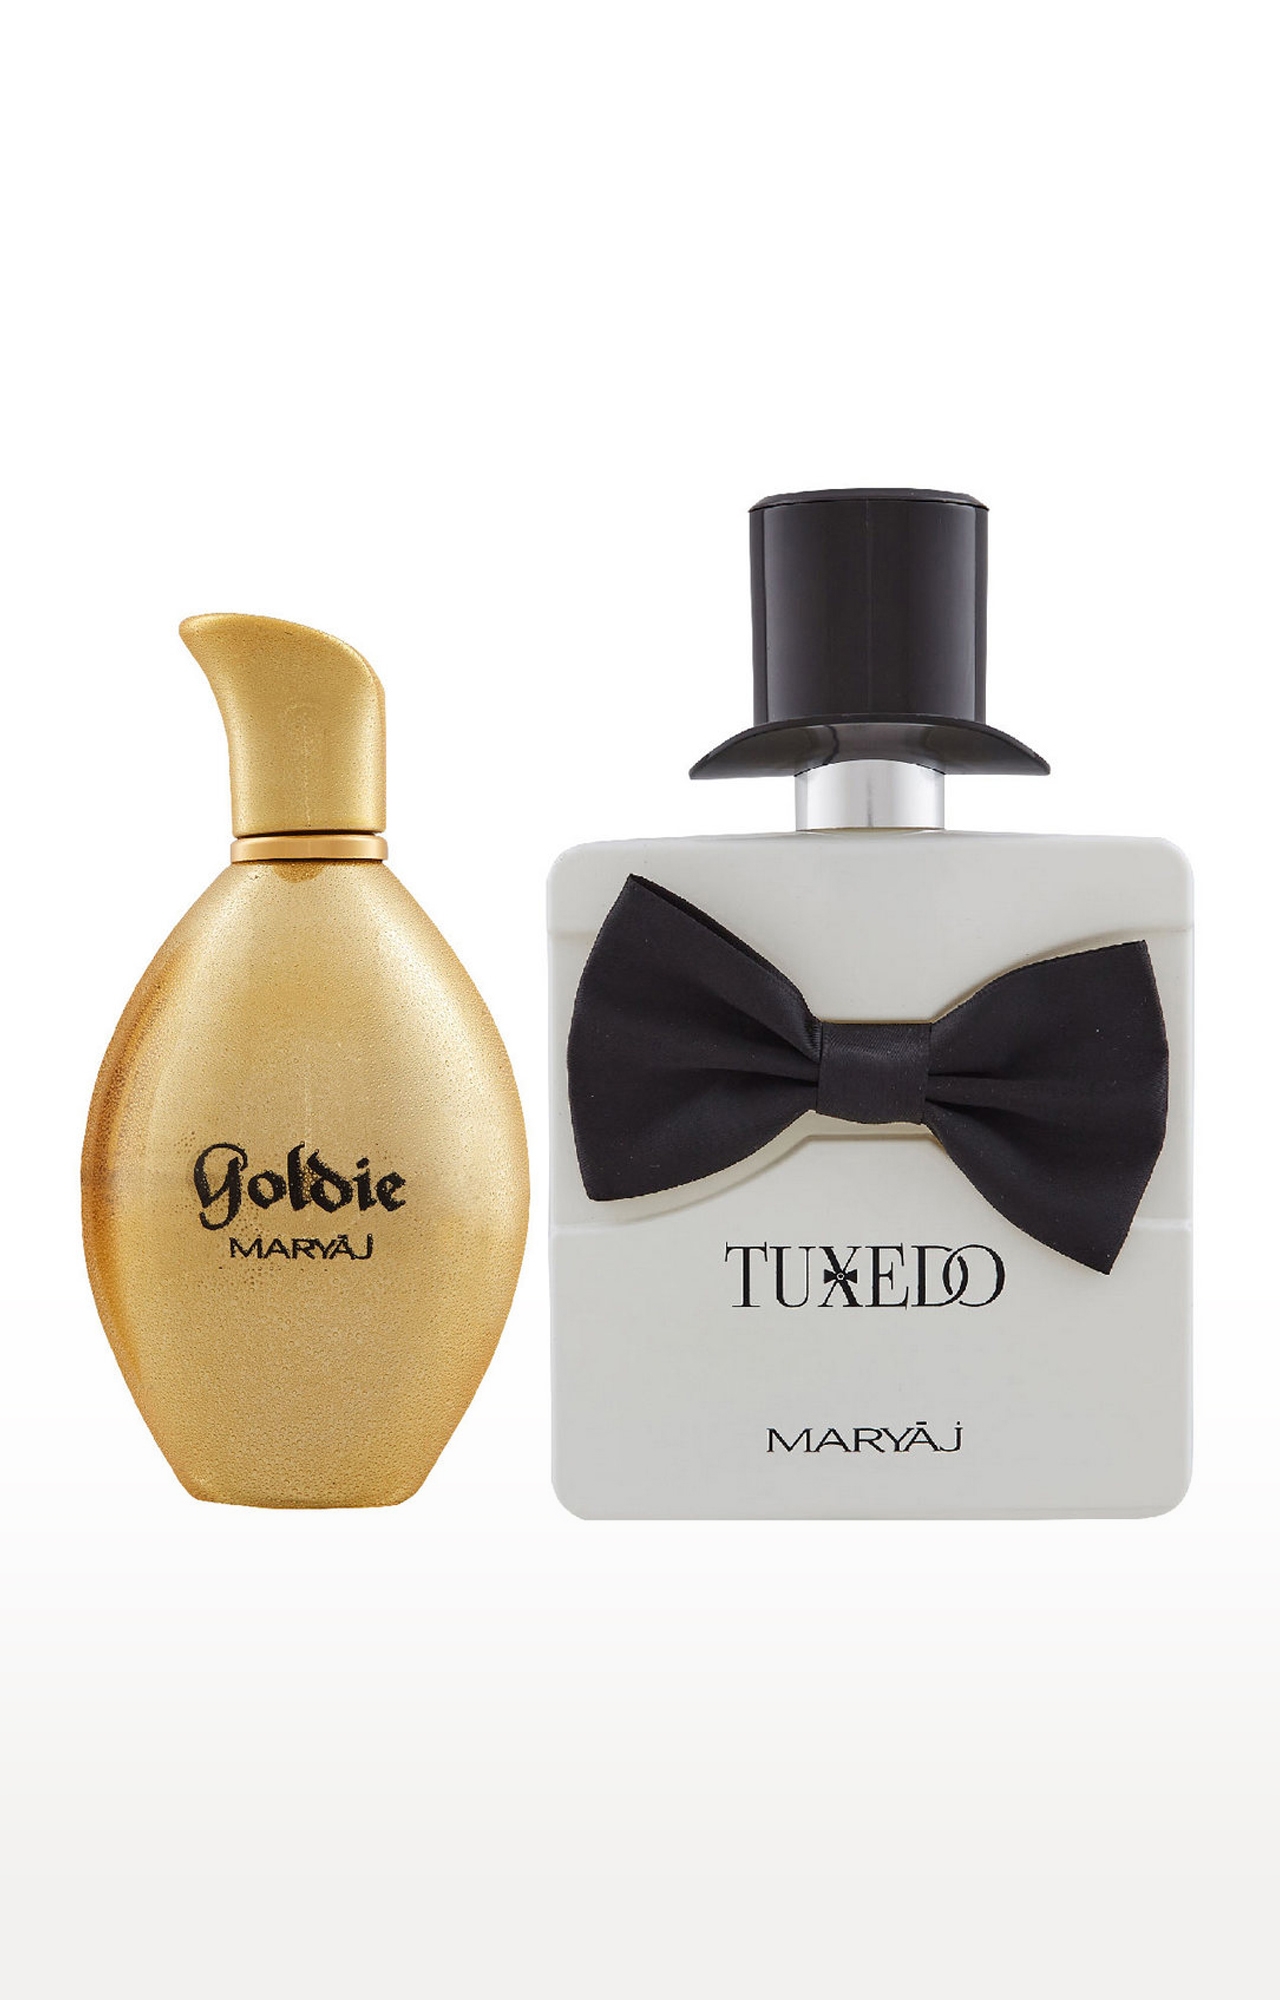 Maryaj Goldie Eau De Parfum Fruity Perfume 100ml for Women and Maryaj Tuxedo Eau De Parfum Perfume 100ml for Men